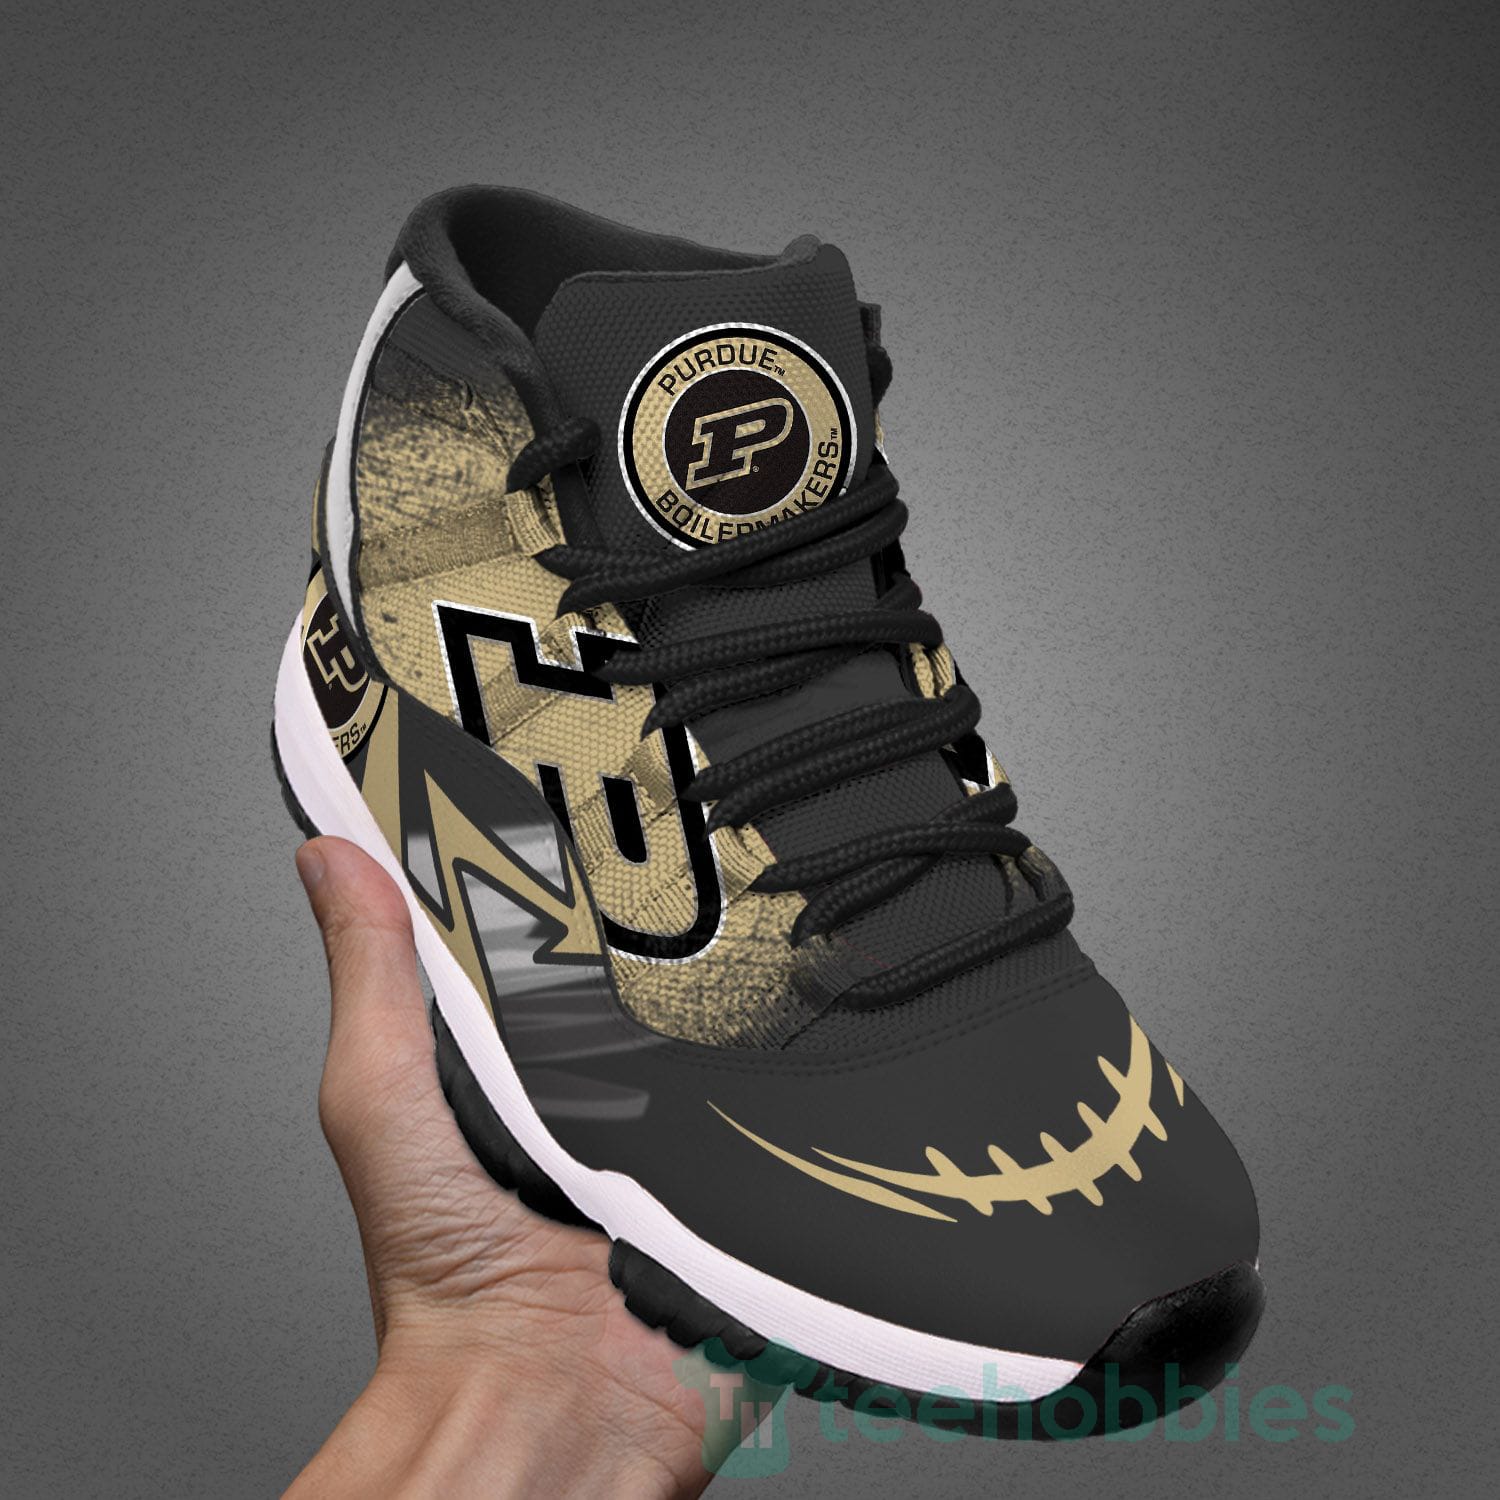 Purdue Boilermakers New Air Jordan 11 Shoes Fans Product photo 2